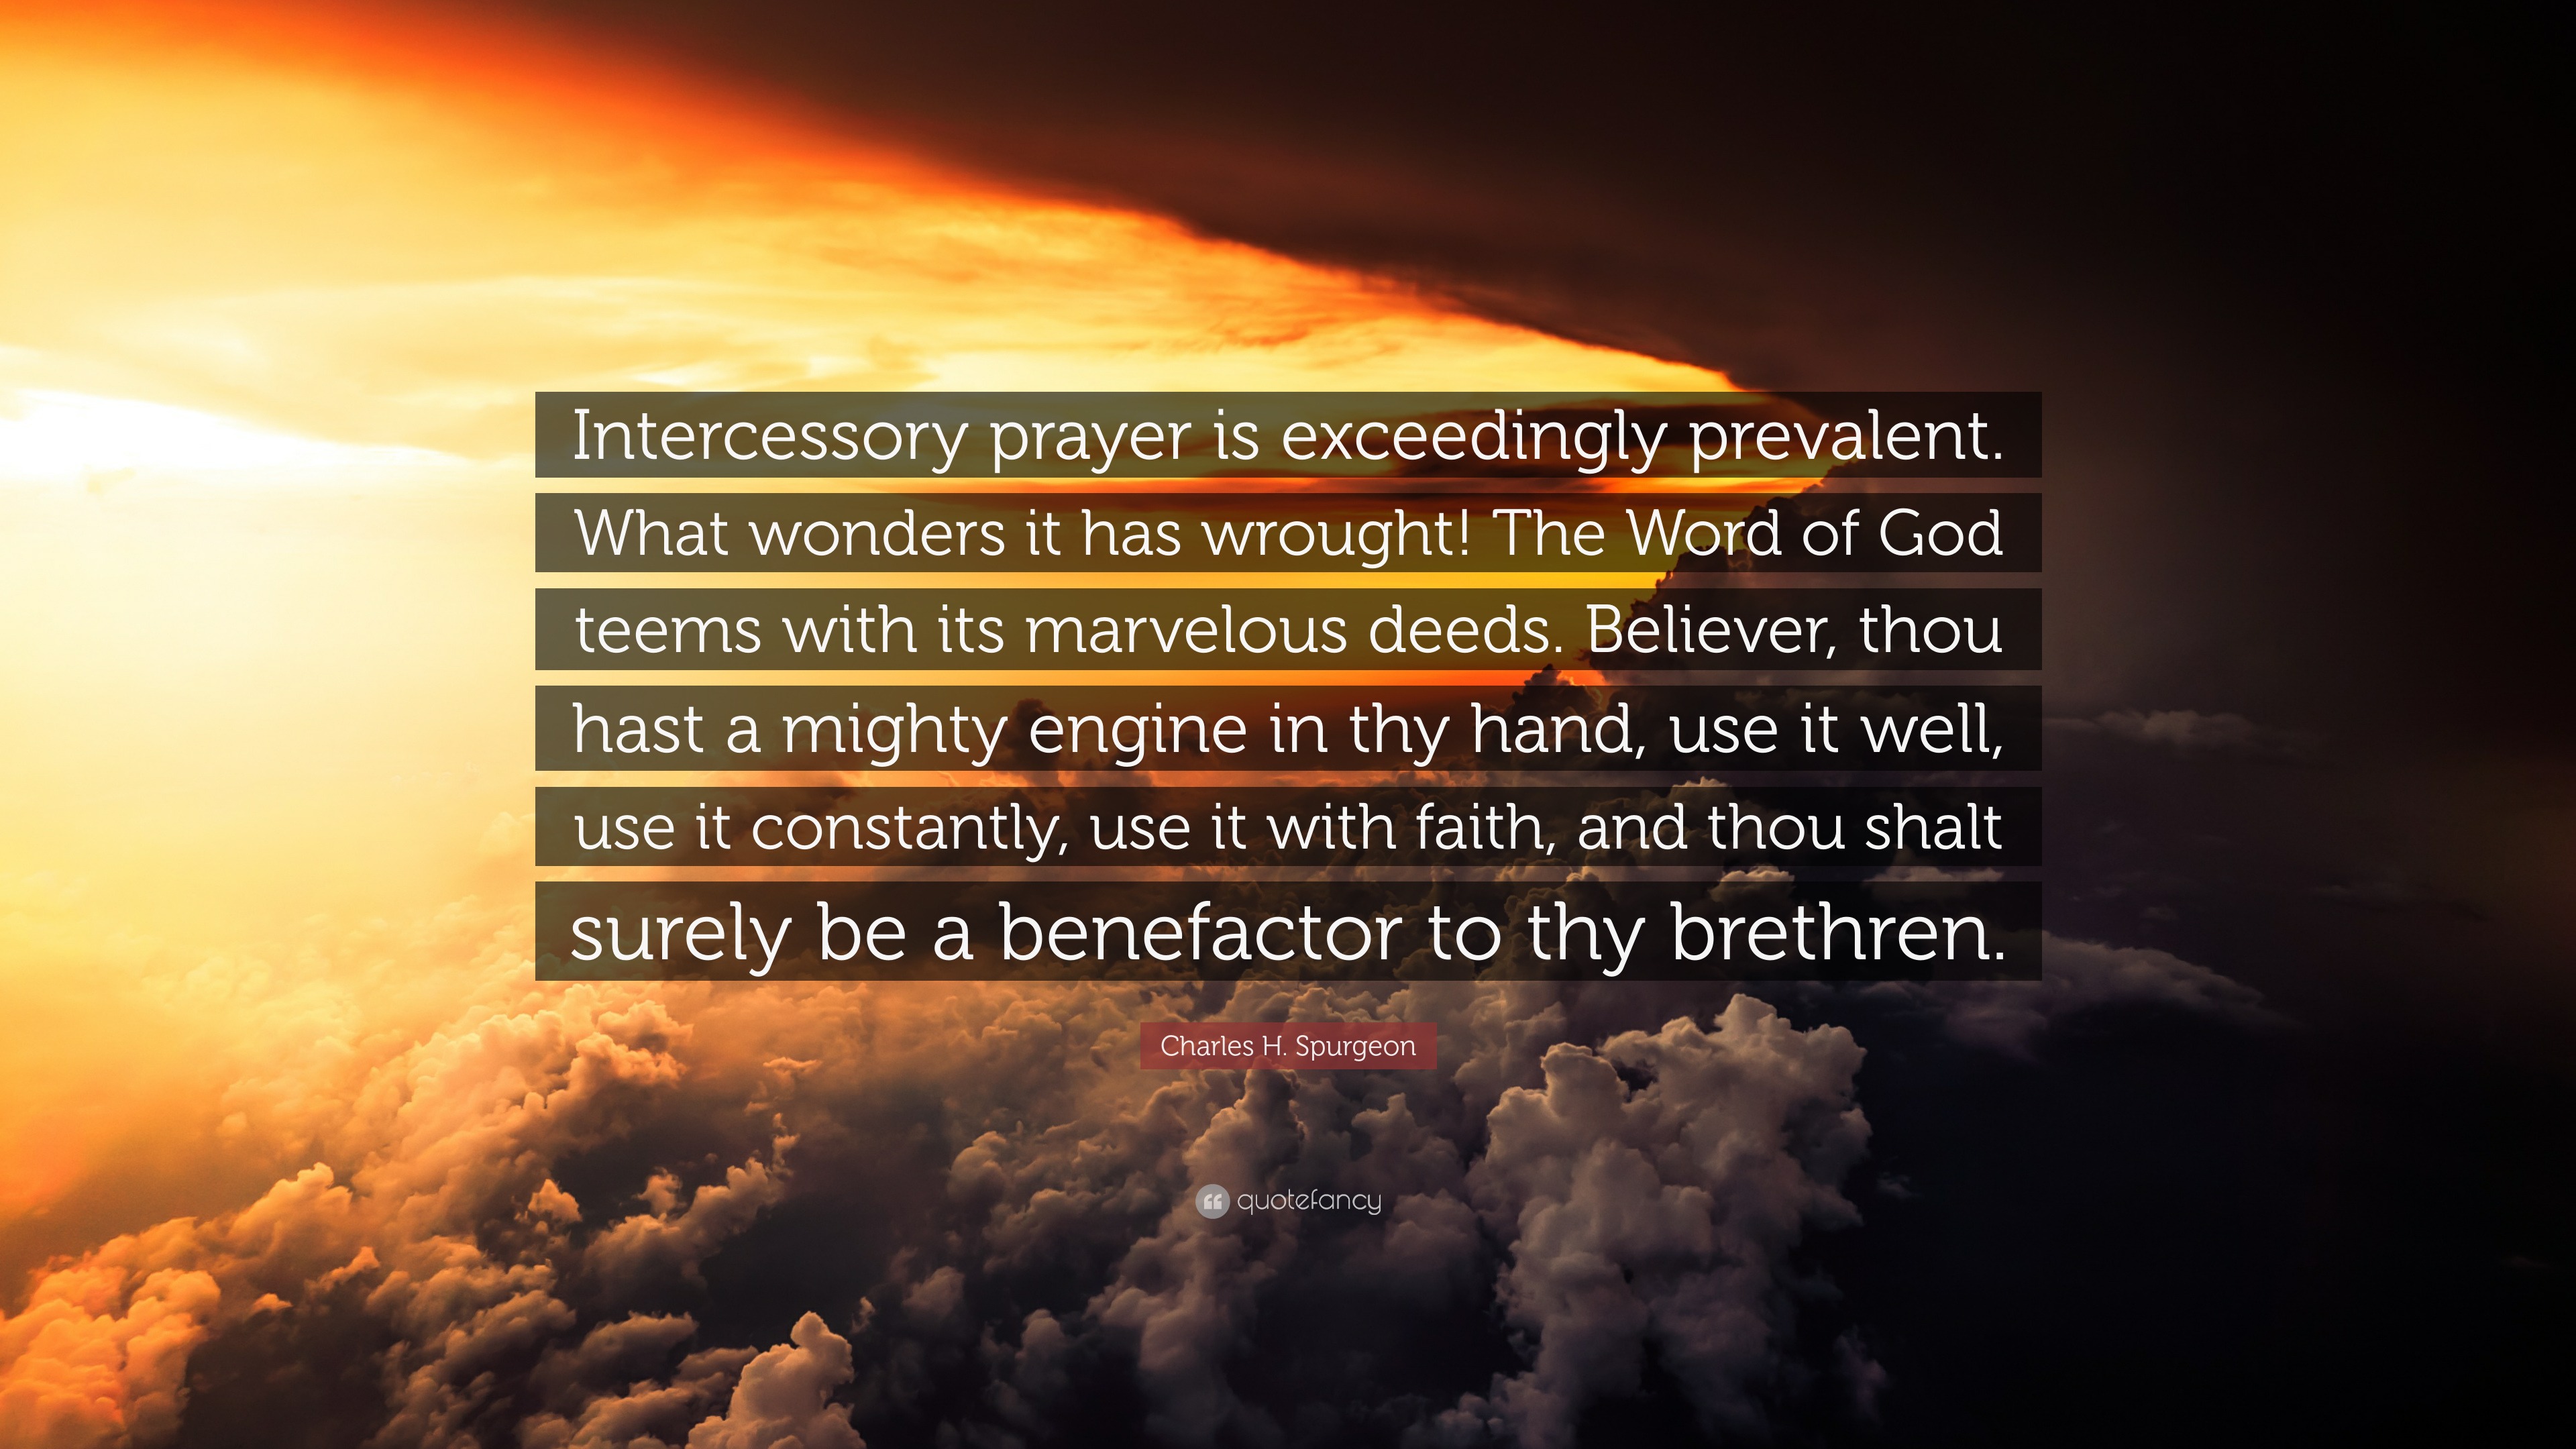 Charles H. Spurgeon Quote: “Intercessory prayer is exceedingly ...
